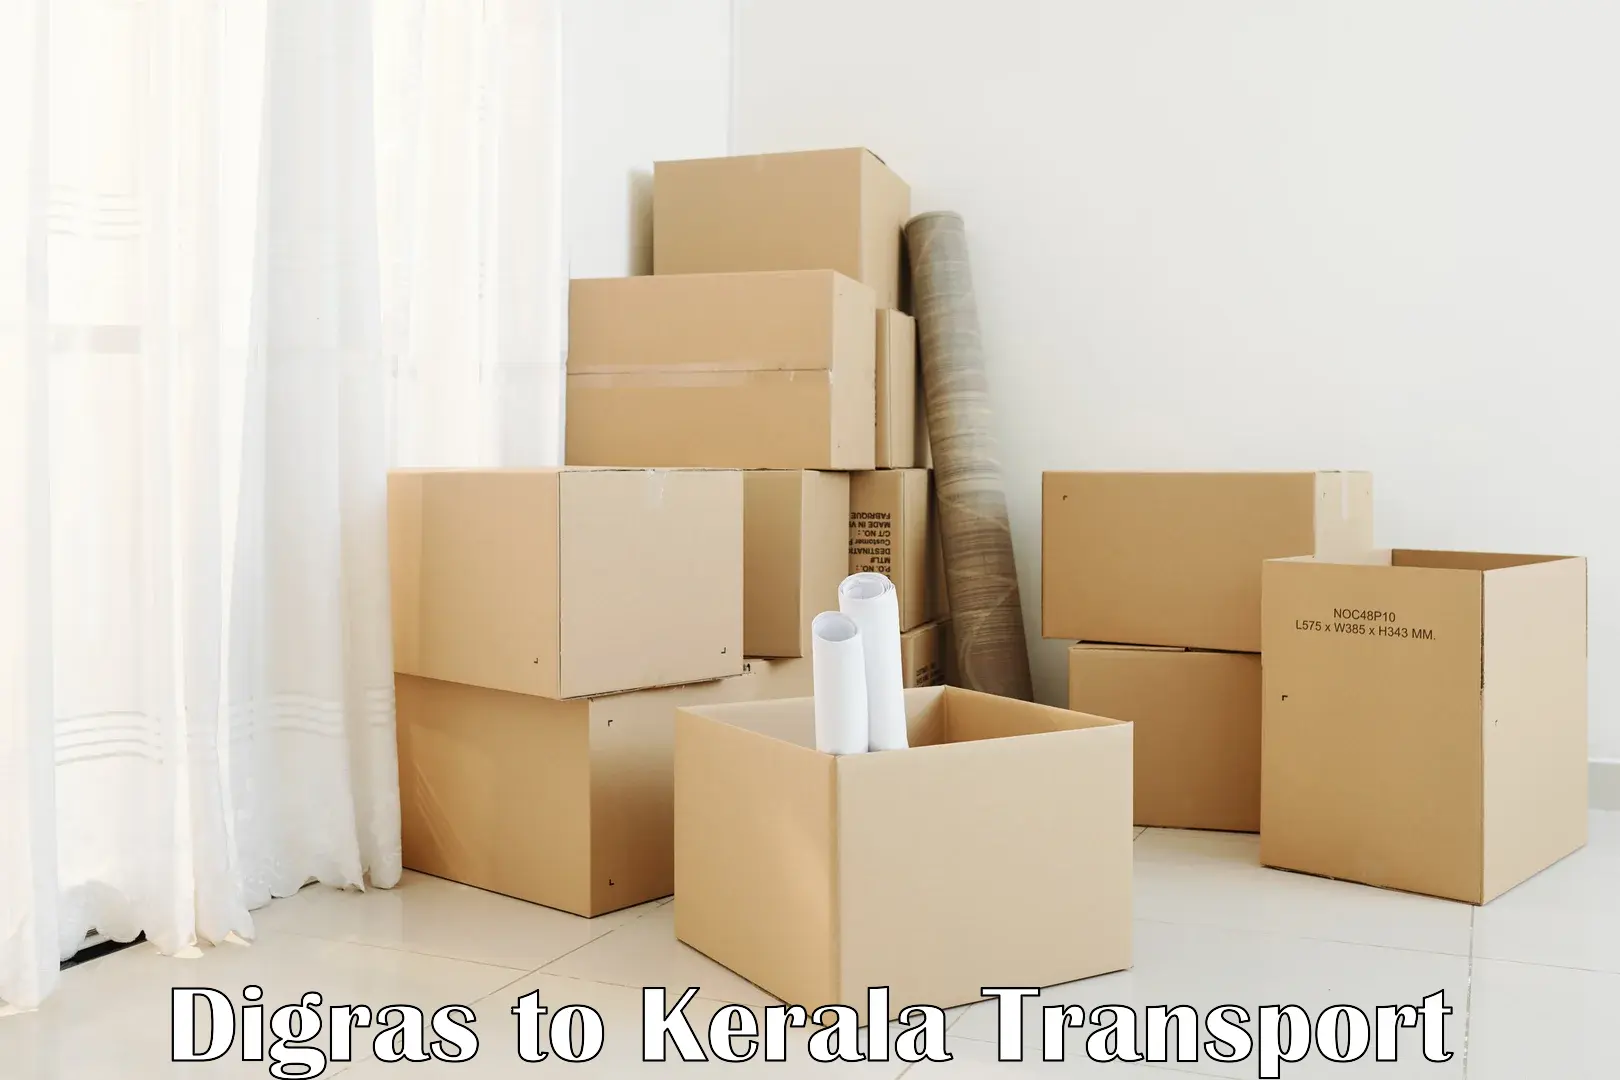 Transport in sharing Digras to Kottayam